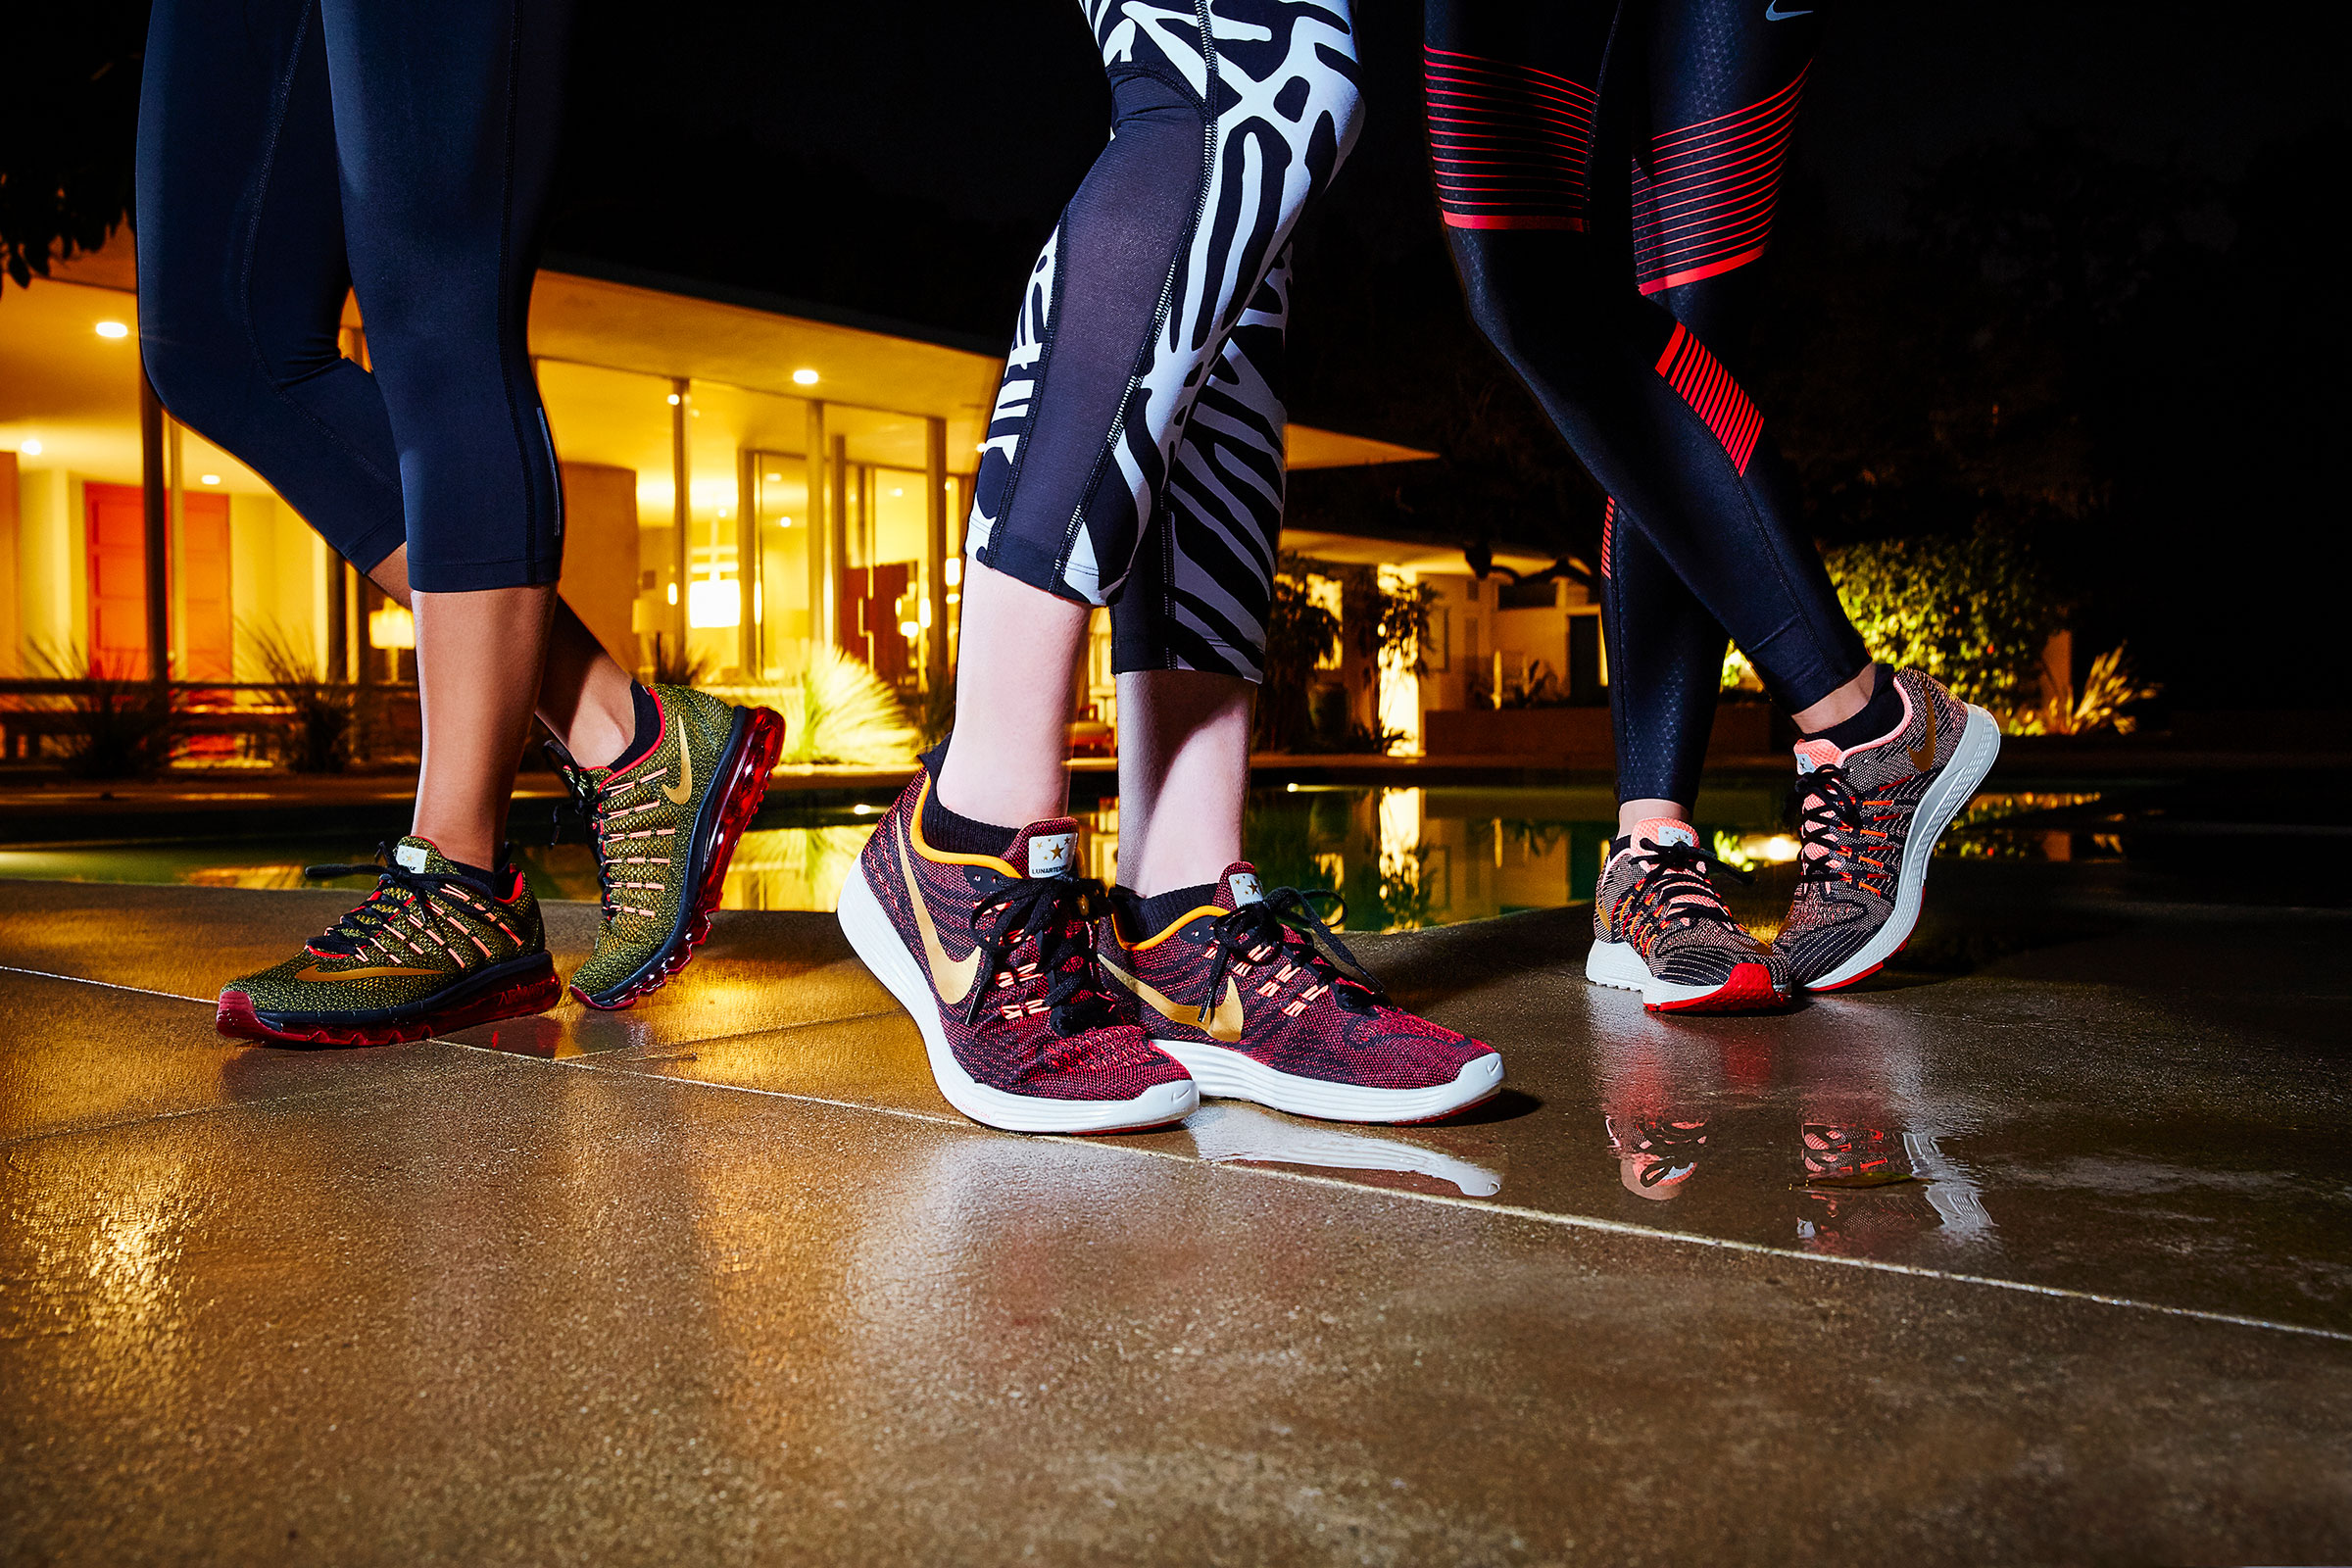 Nike Red Carpet Campaign shot by River Jordan